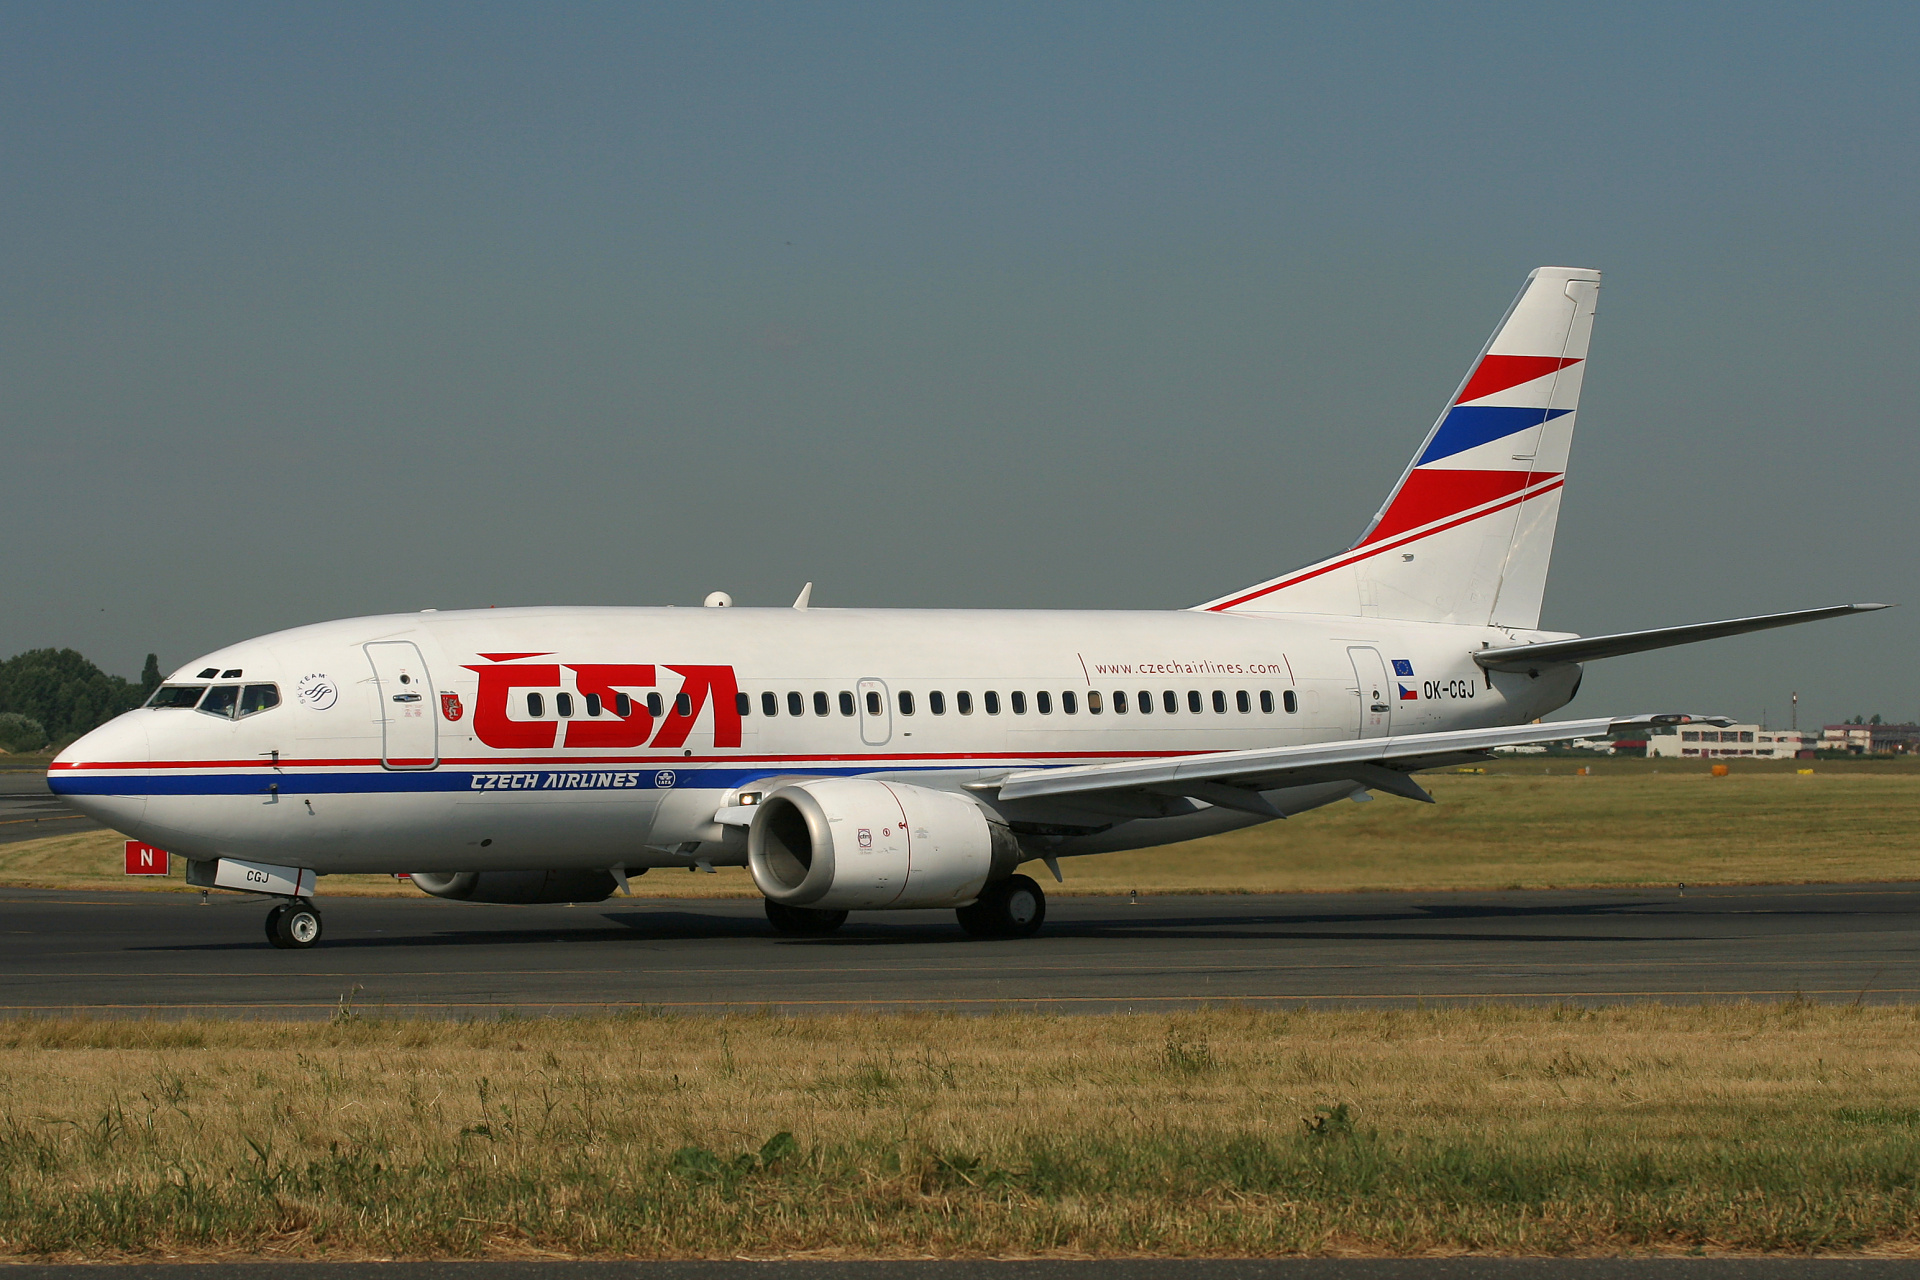 OK-CGJ (Aircraft » EPWA Spotting » Boeing 737-500 » CSA Czech Airlines)